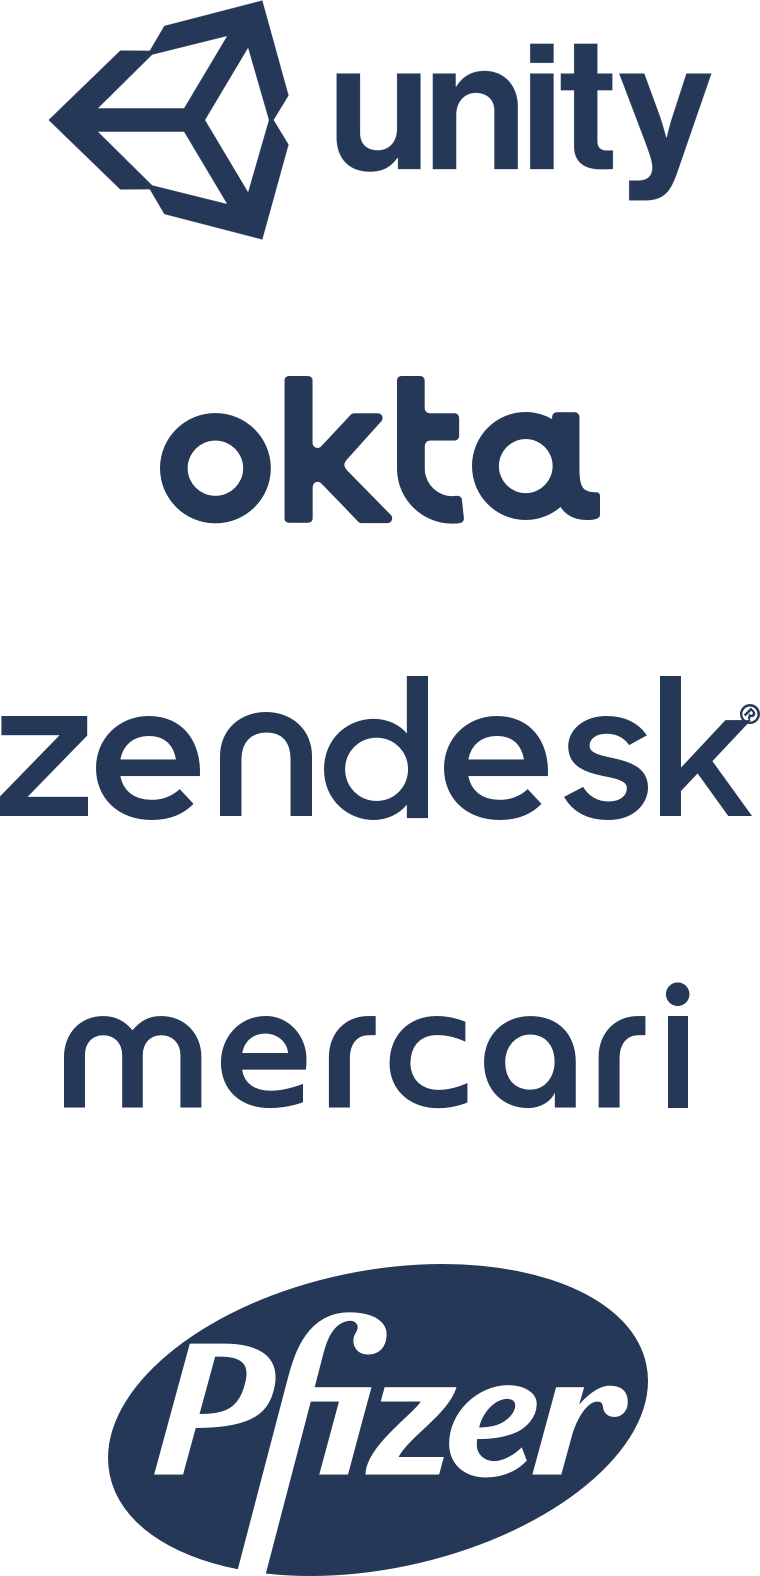 Unity, Okta, Zendesk, Mercari, Pfizer logos